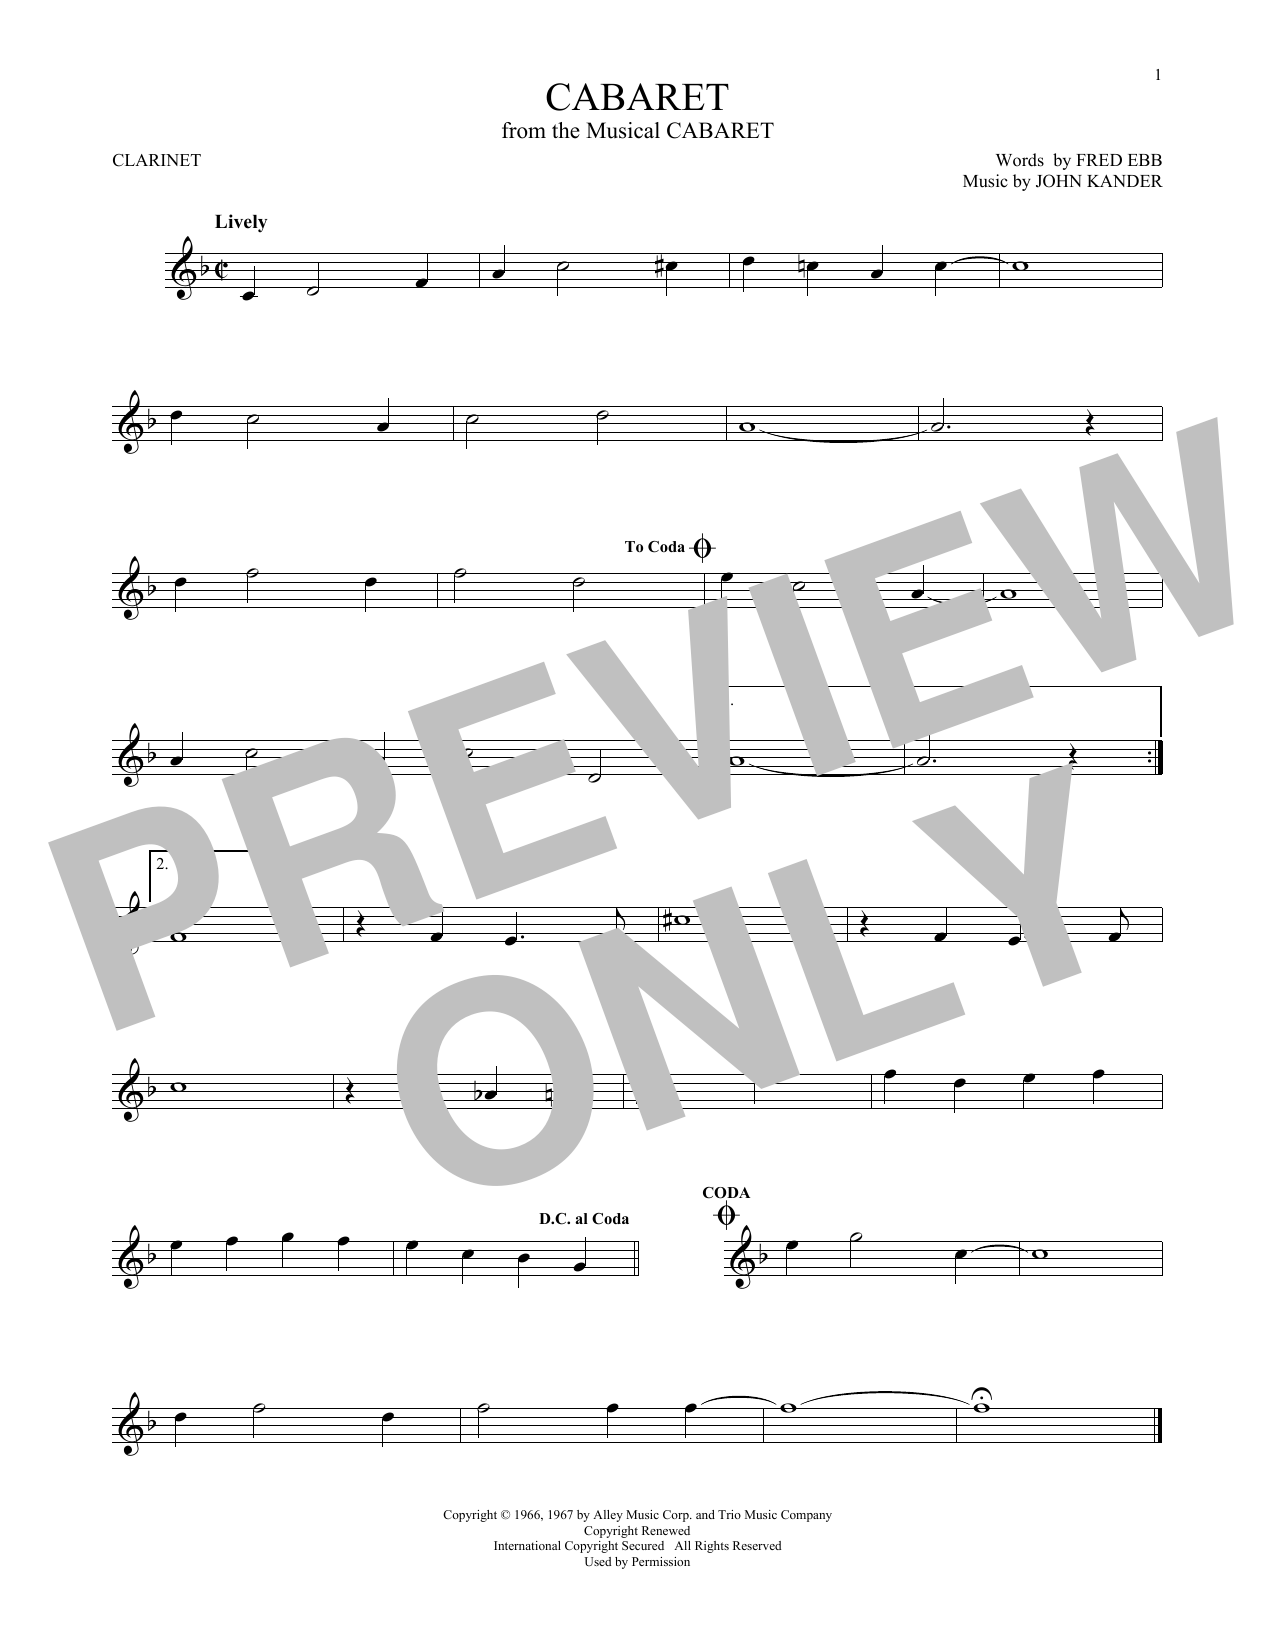 John Kander & Fred Ebb Cabaret Sheet Music Notes & Chords for Trombone - Download or Print PDF